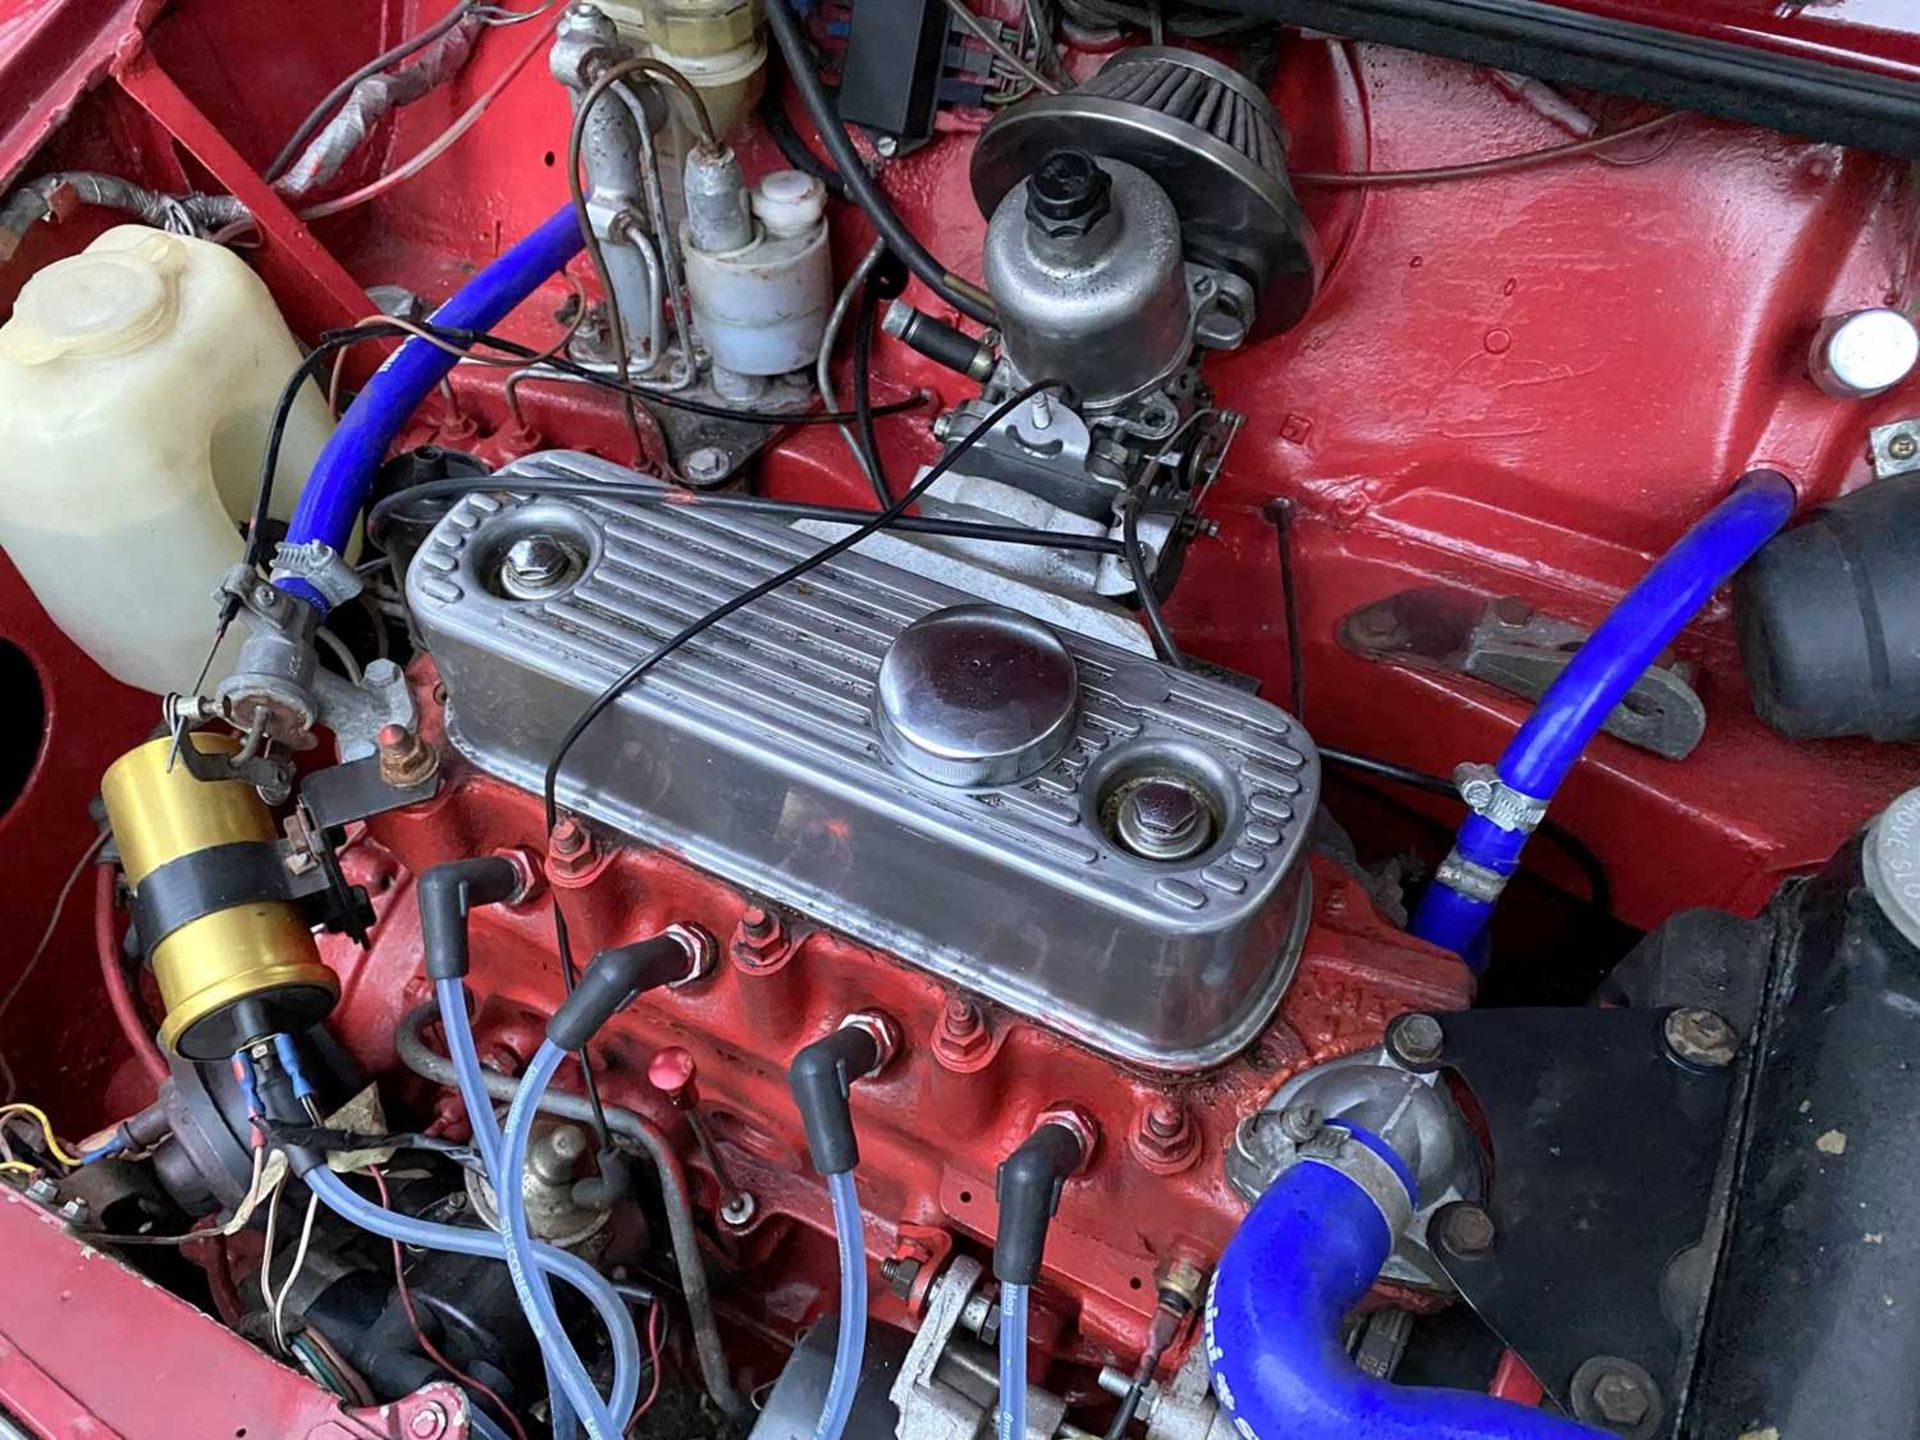 1984 Austin Mini 1330cc engine - Image 52 of 82